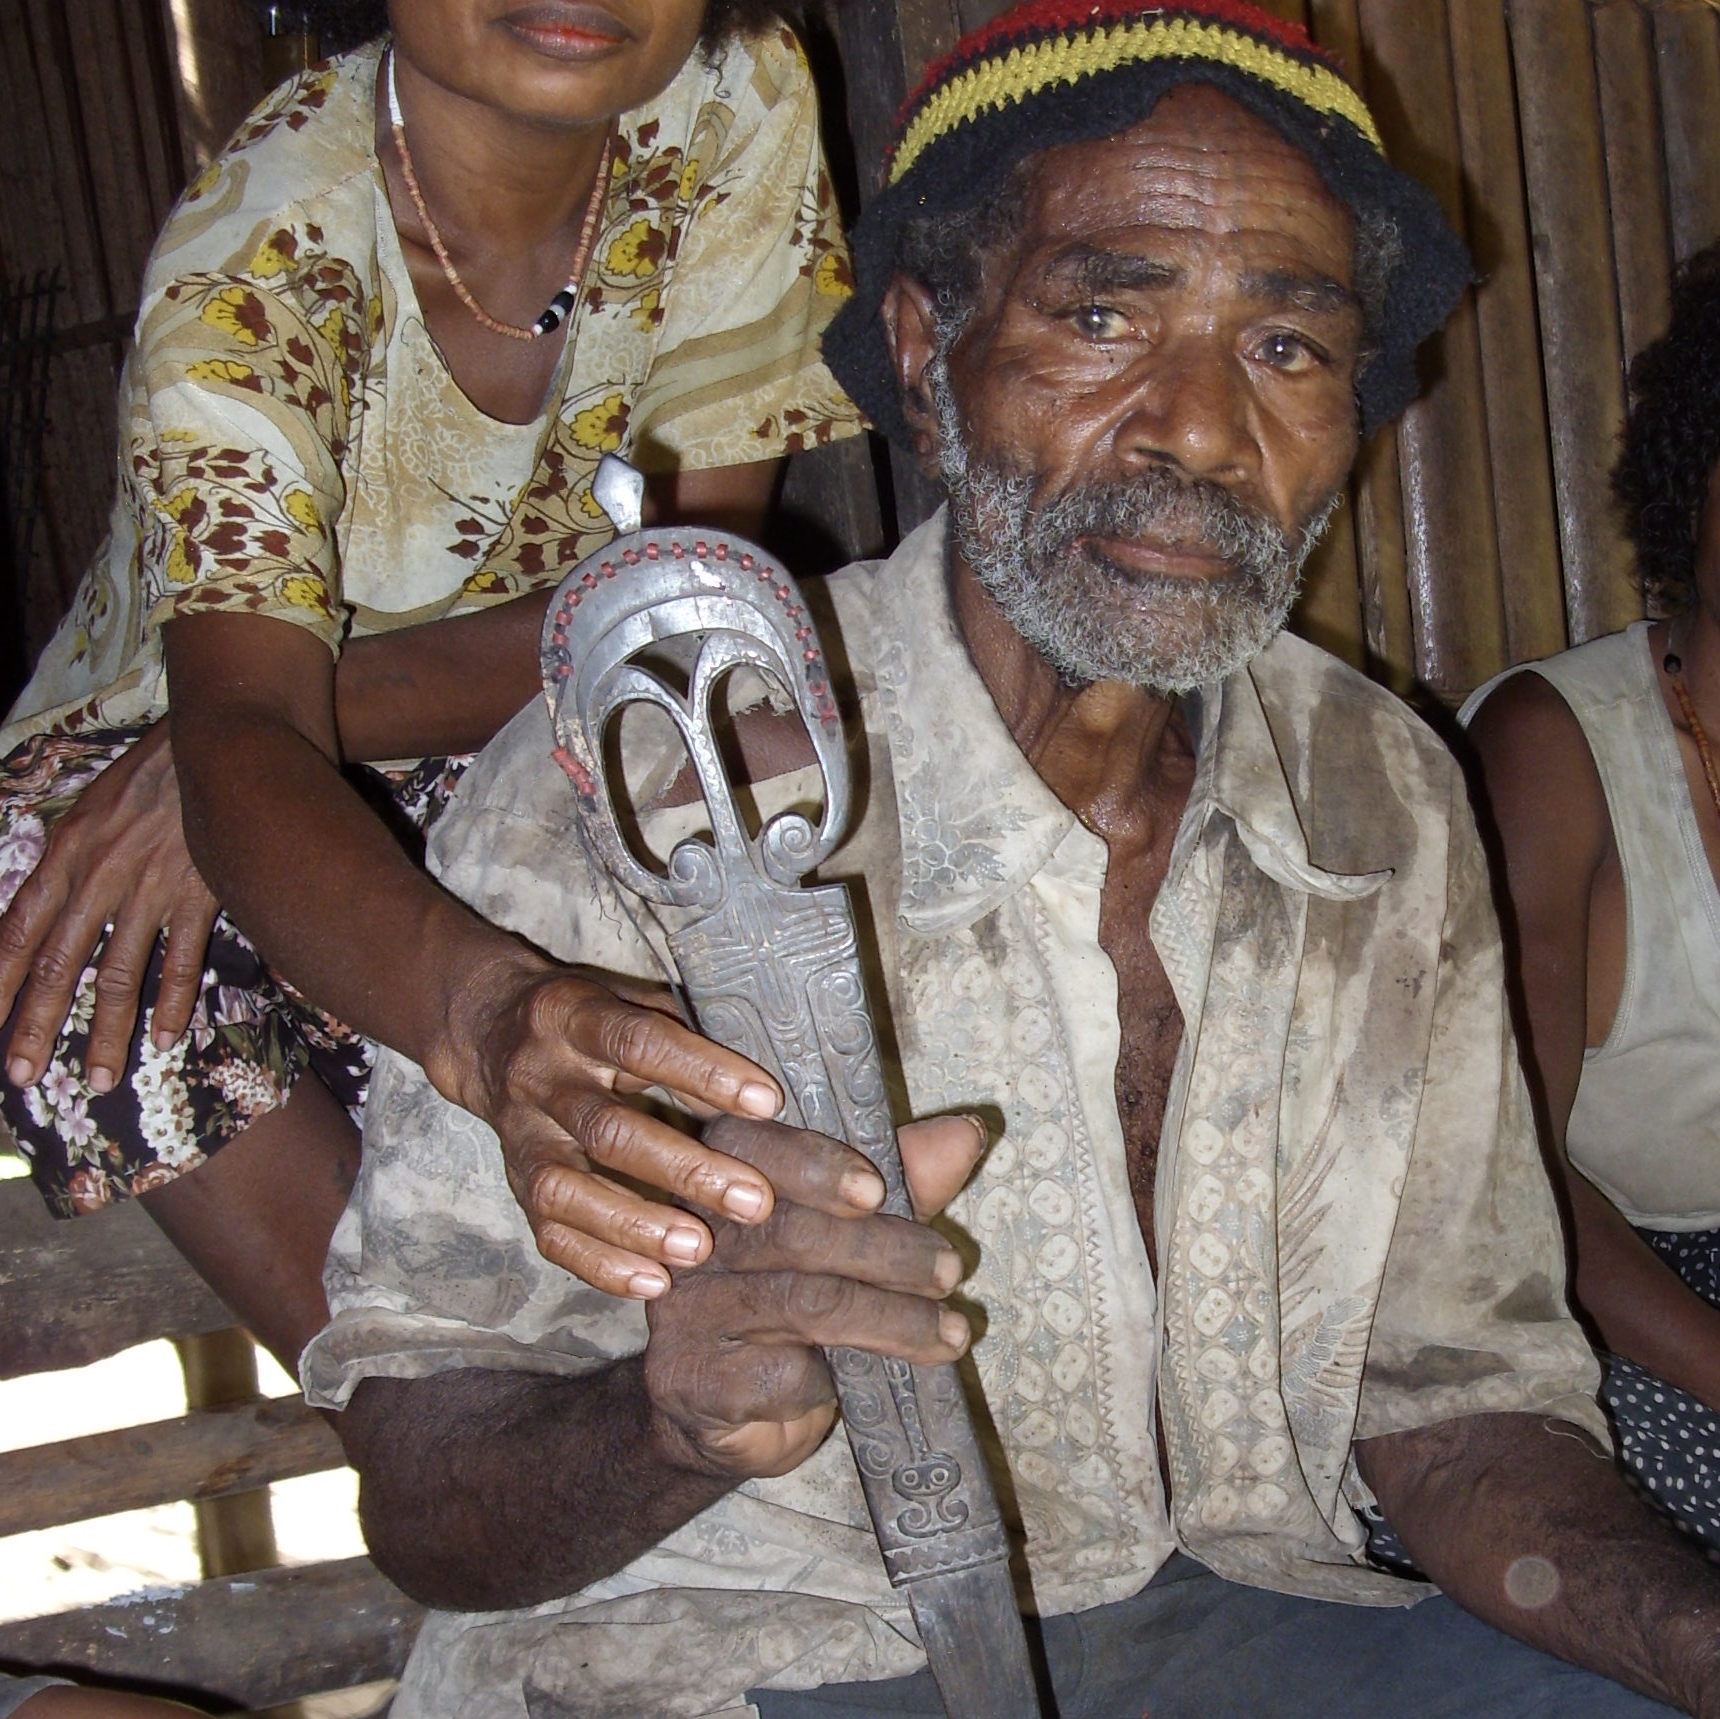 Collingwood Bay man with lime spatula, New Guinea Art, Oceanic Art, Tribal Art, South Pacific Art